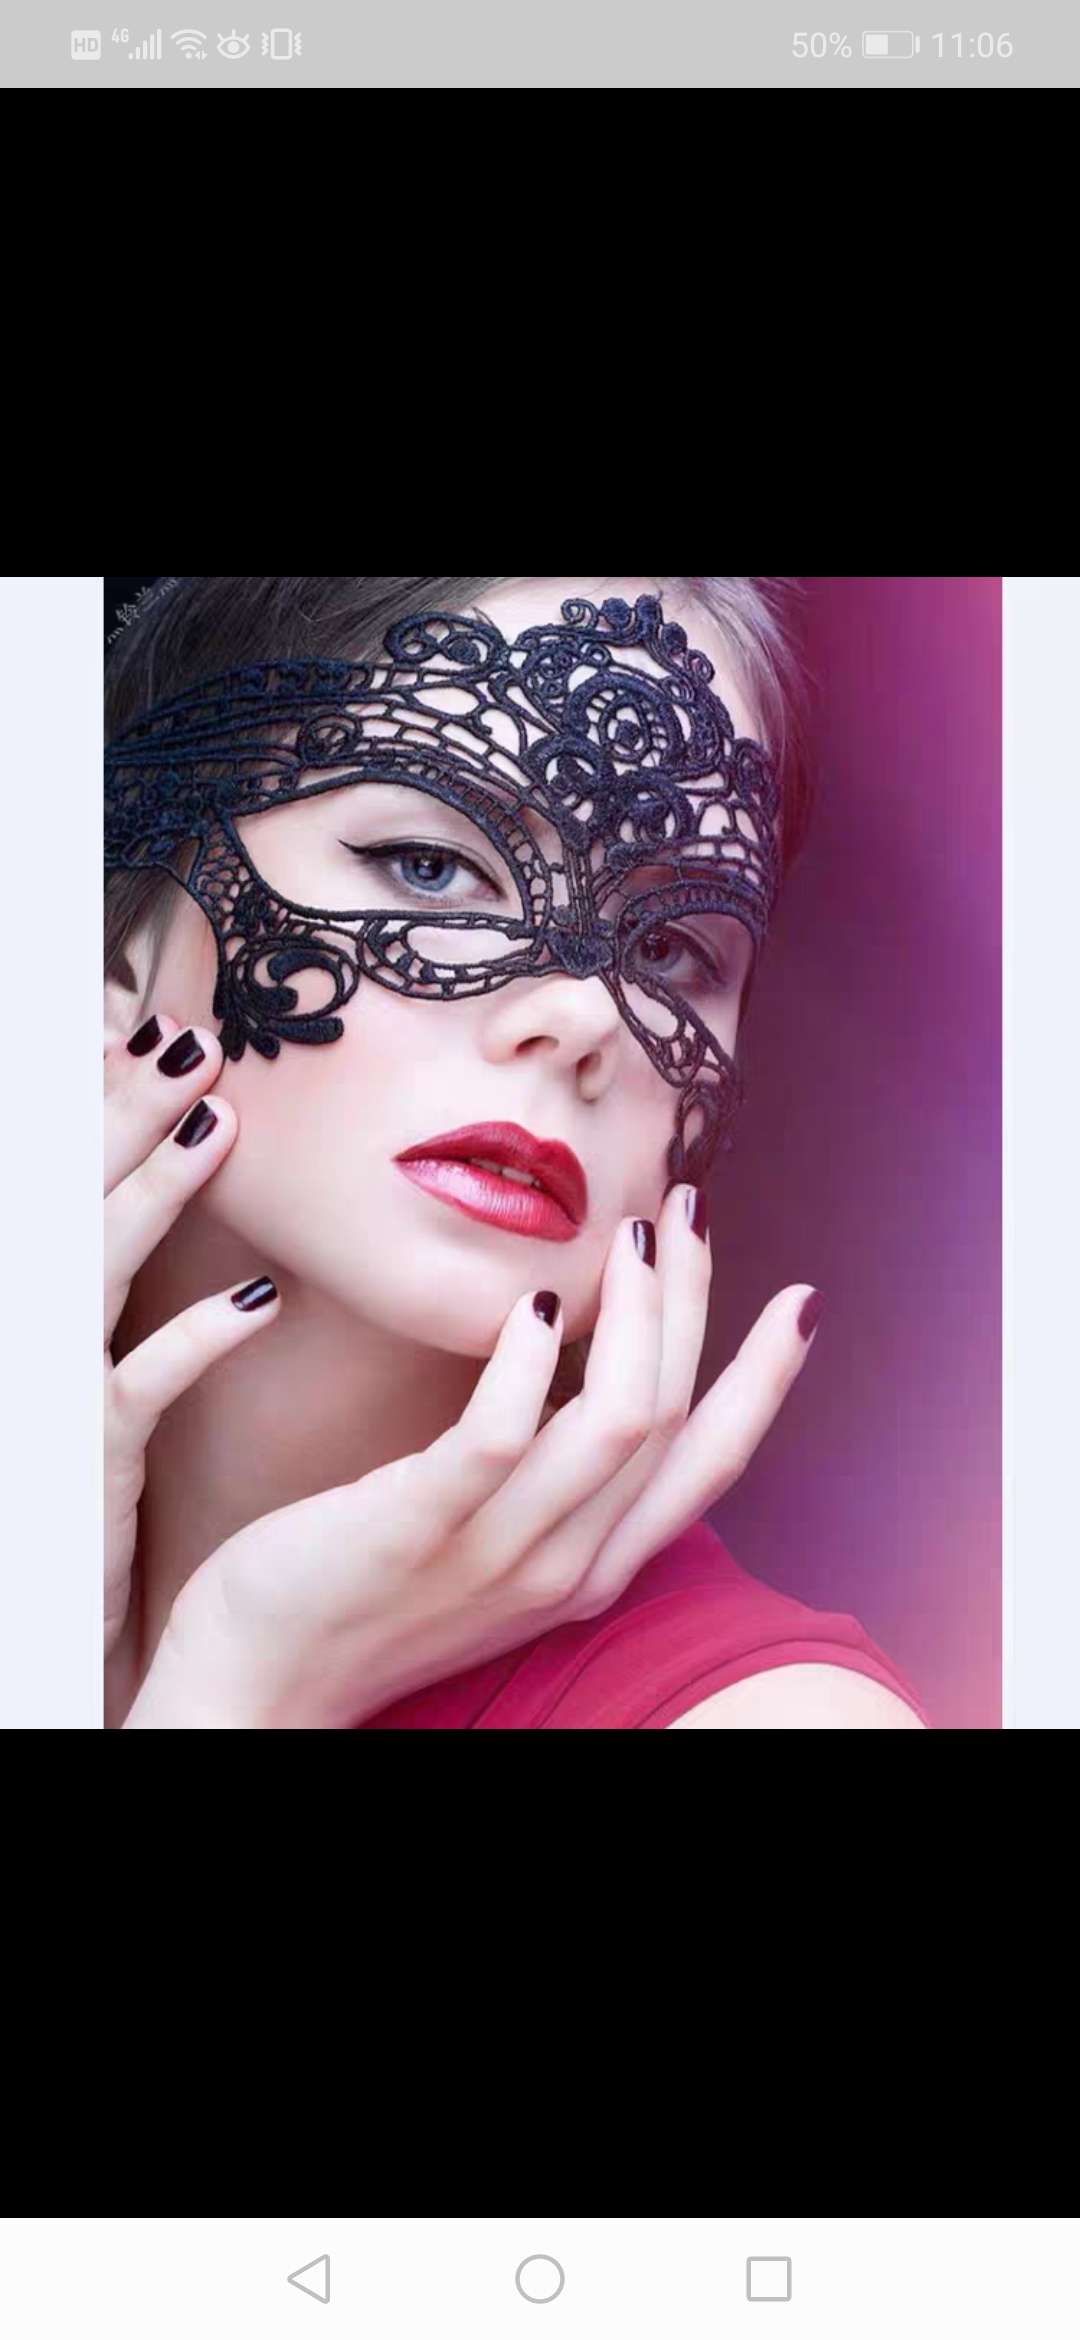 MJ-007化妆舞会黑色蕾丝面具半脸女 万圣节cos派对道具成人定型镂空眼罩面纱详情图5